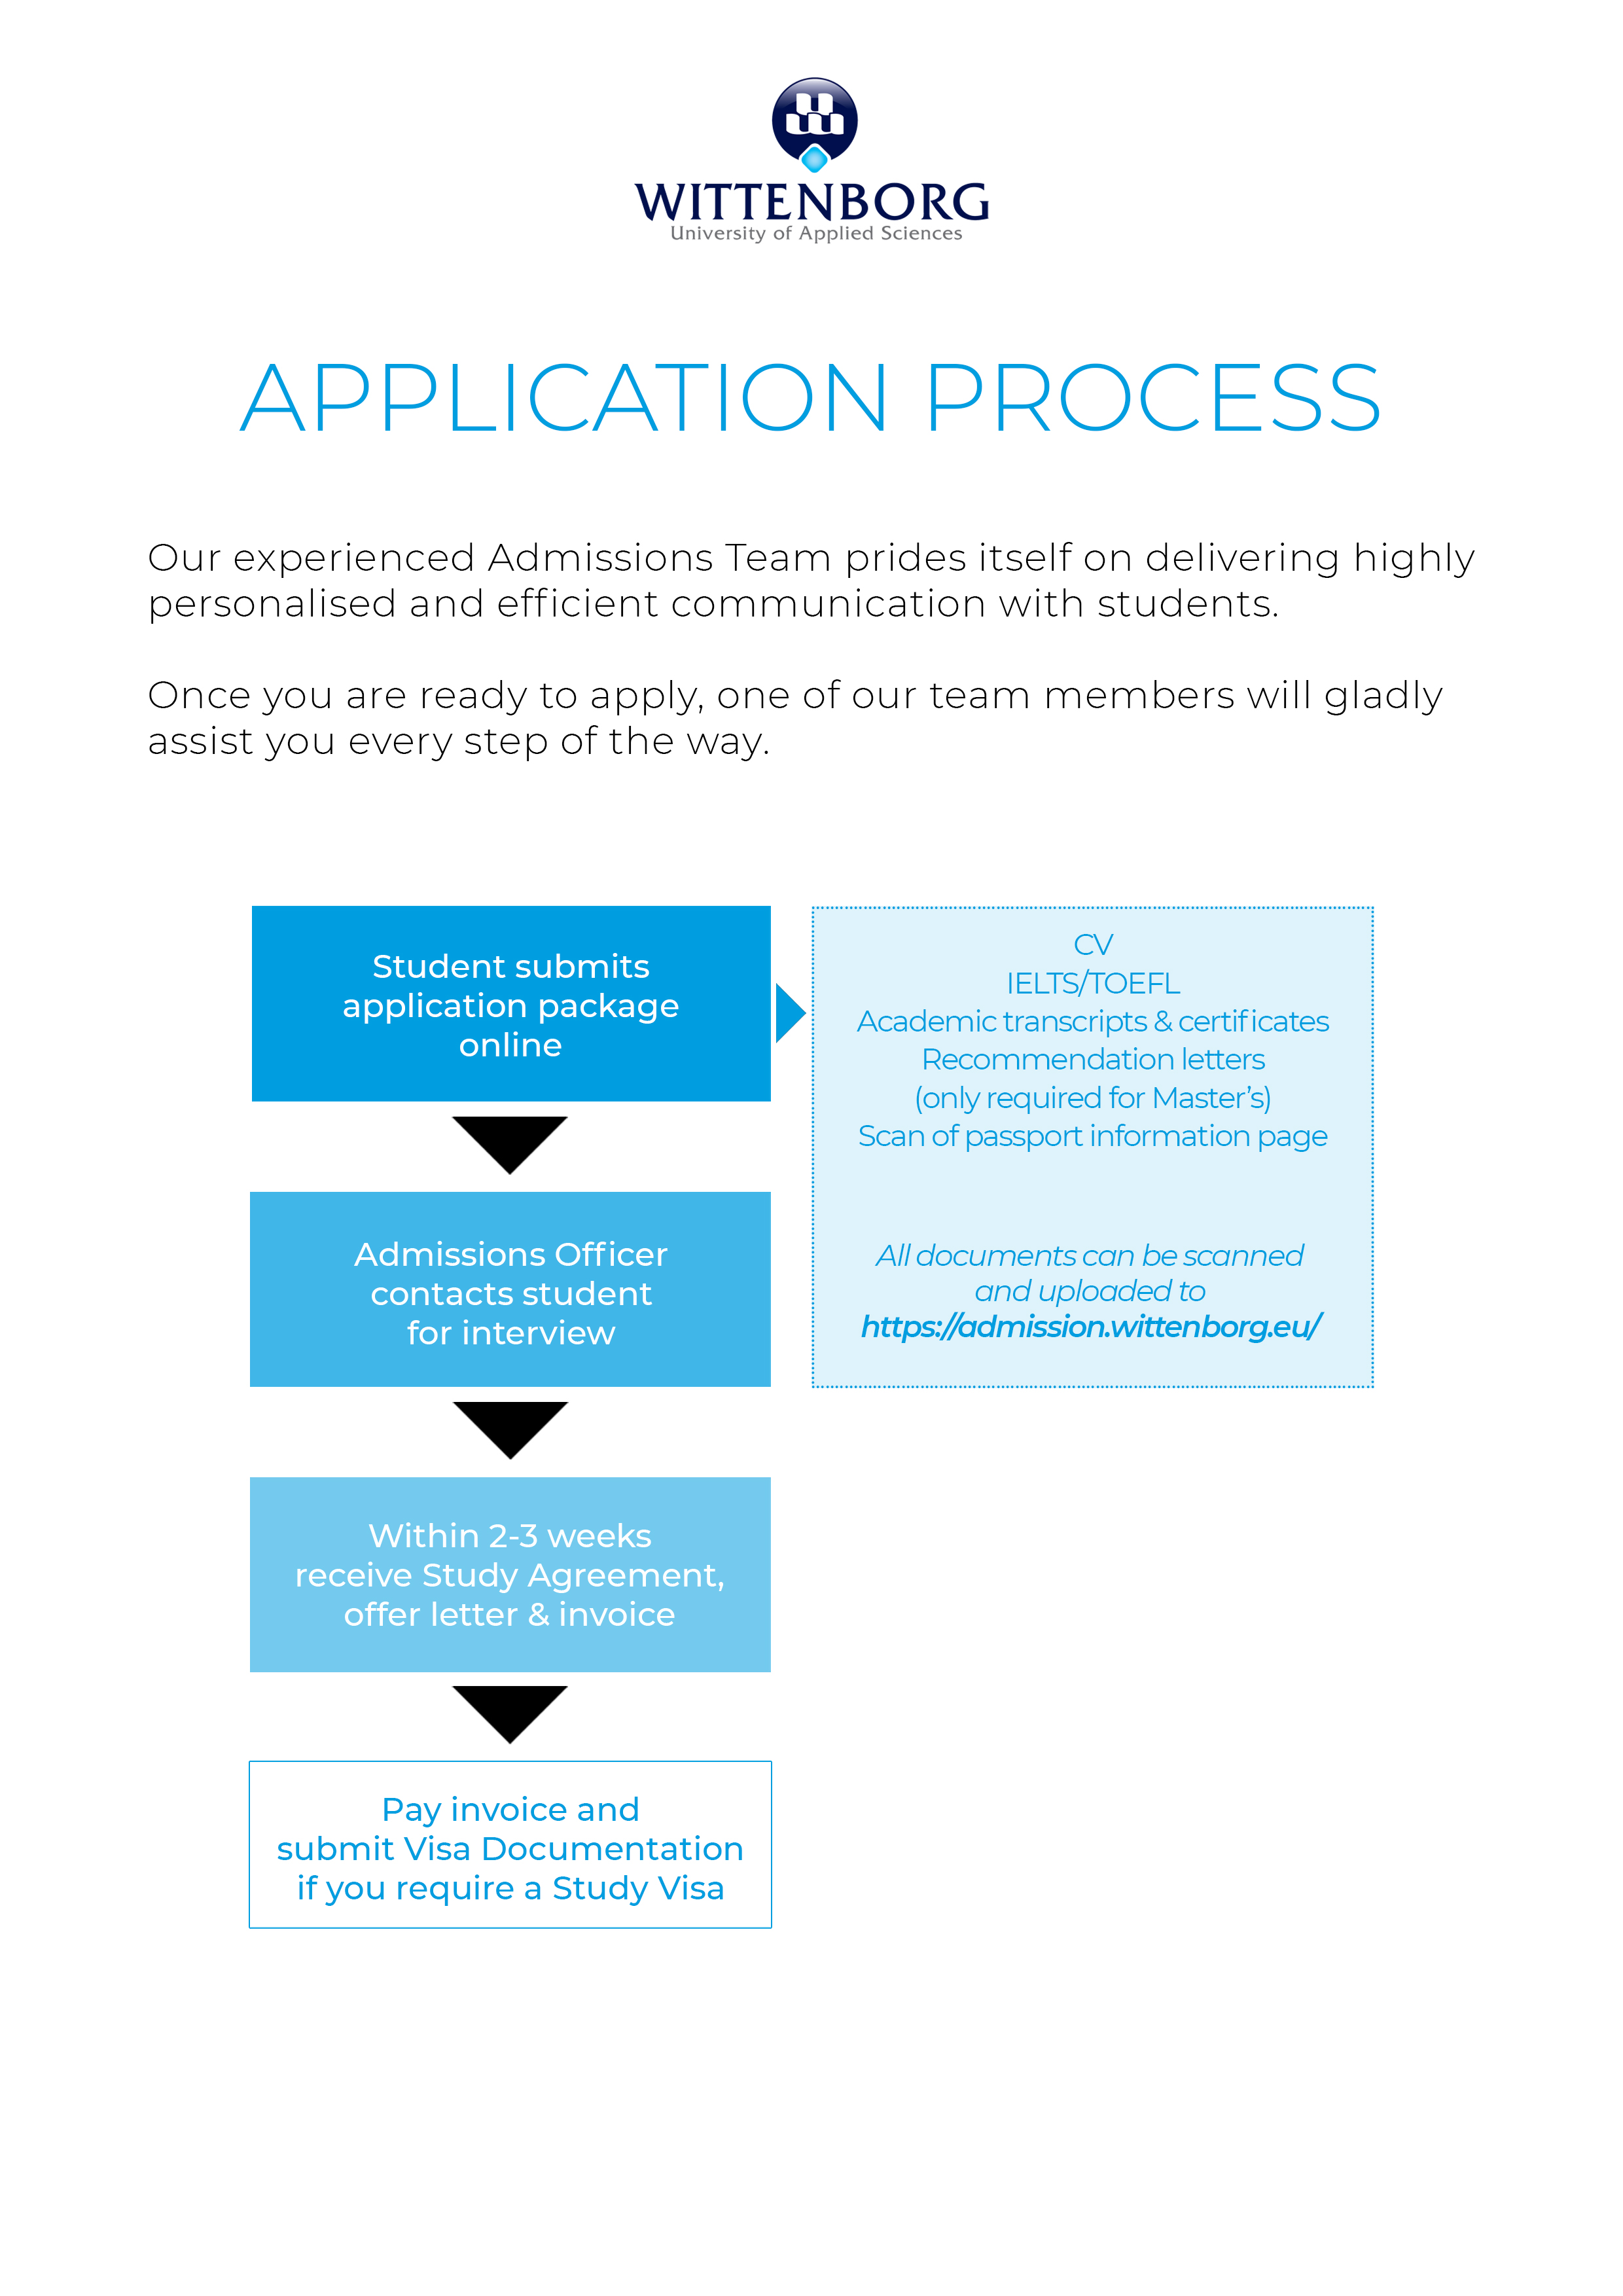 Wittenborg Application Process